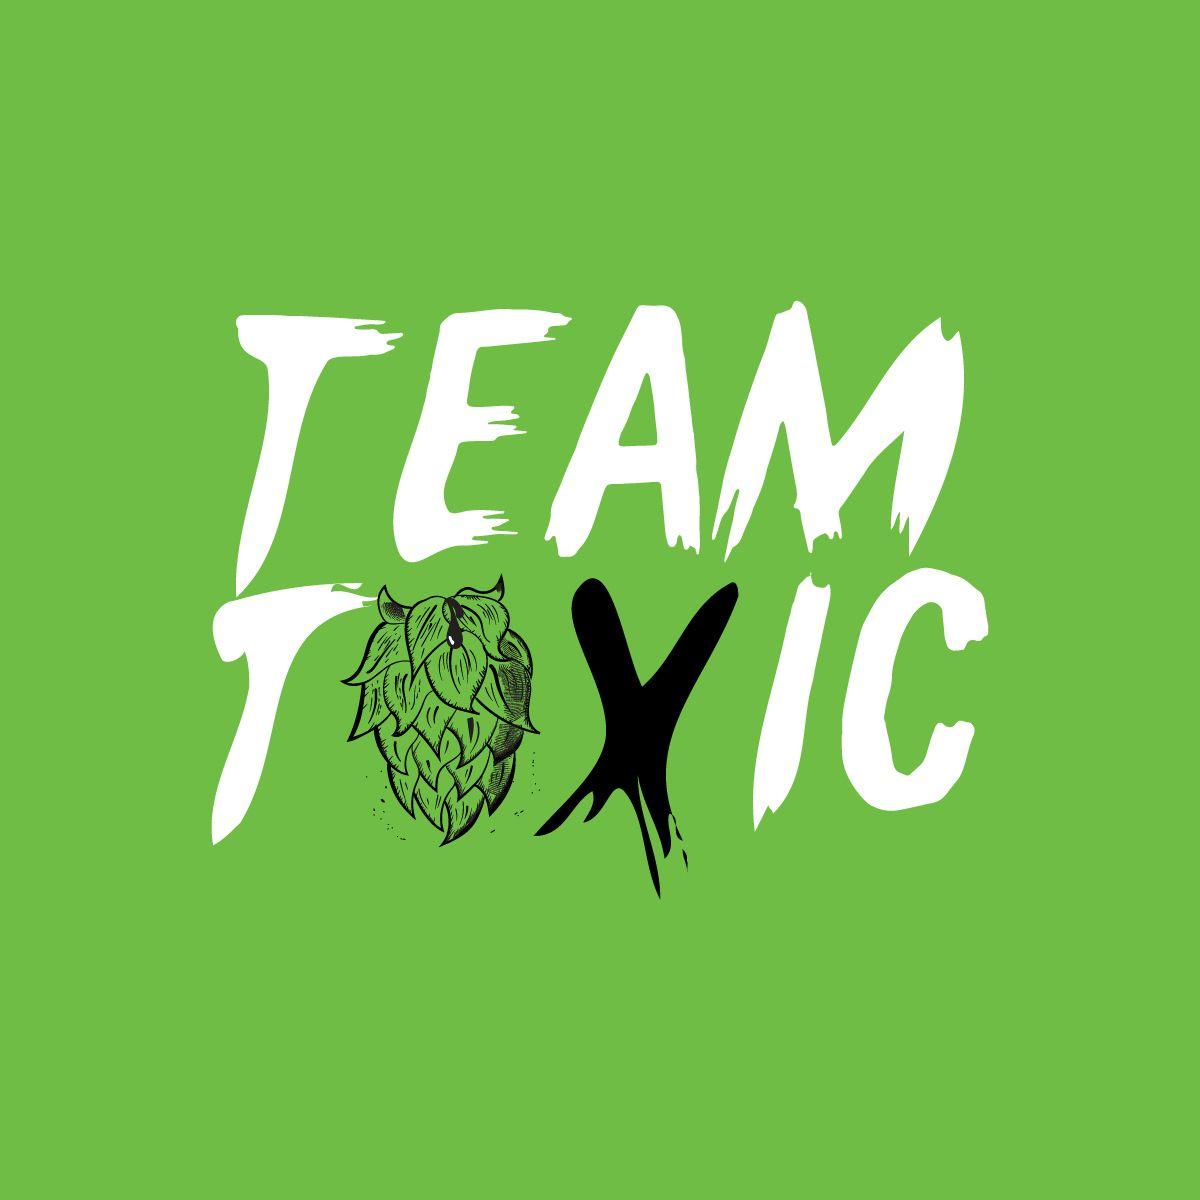 Toxiz Logo - Team Toxic